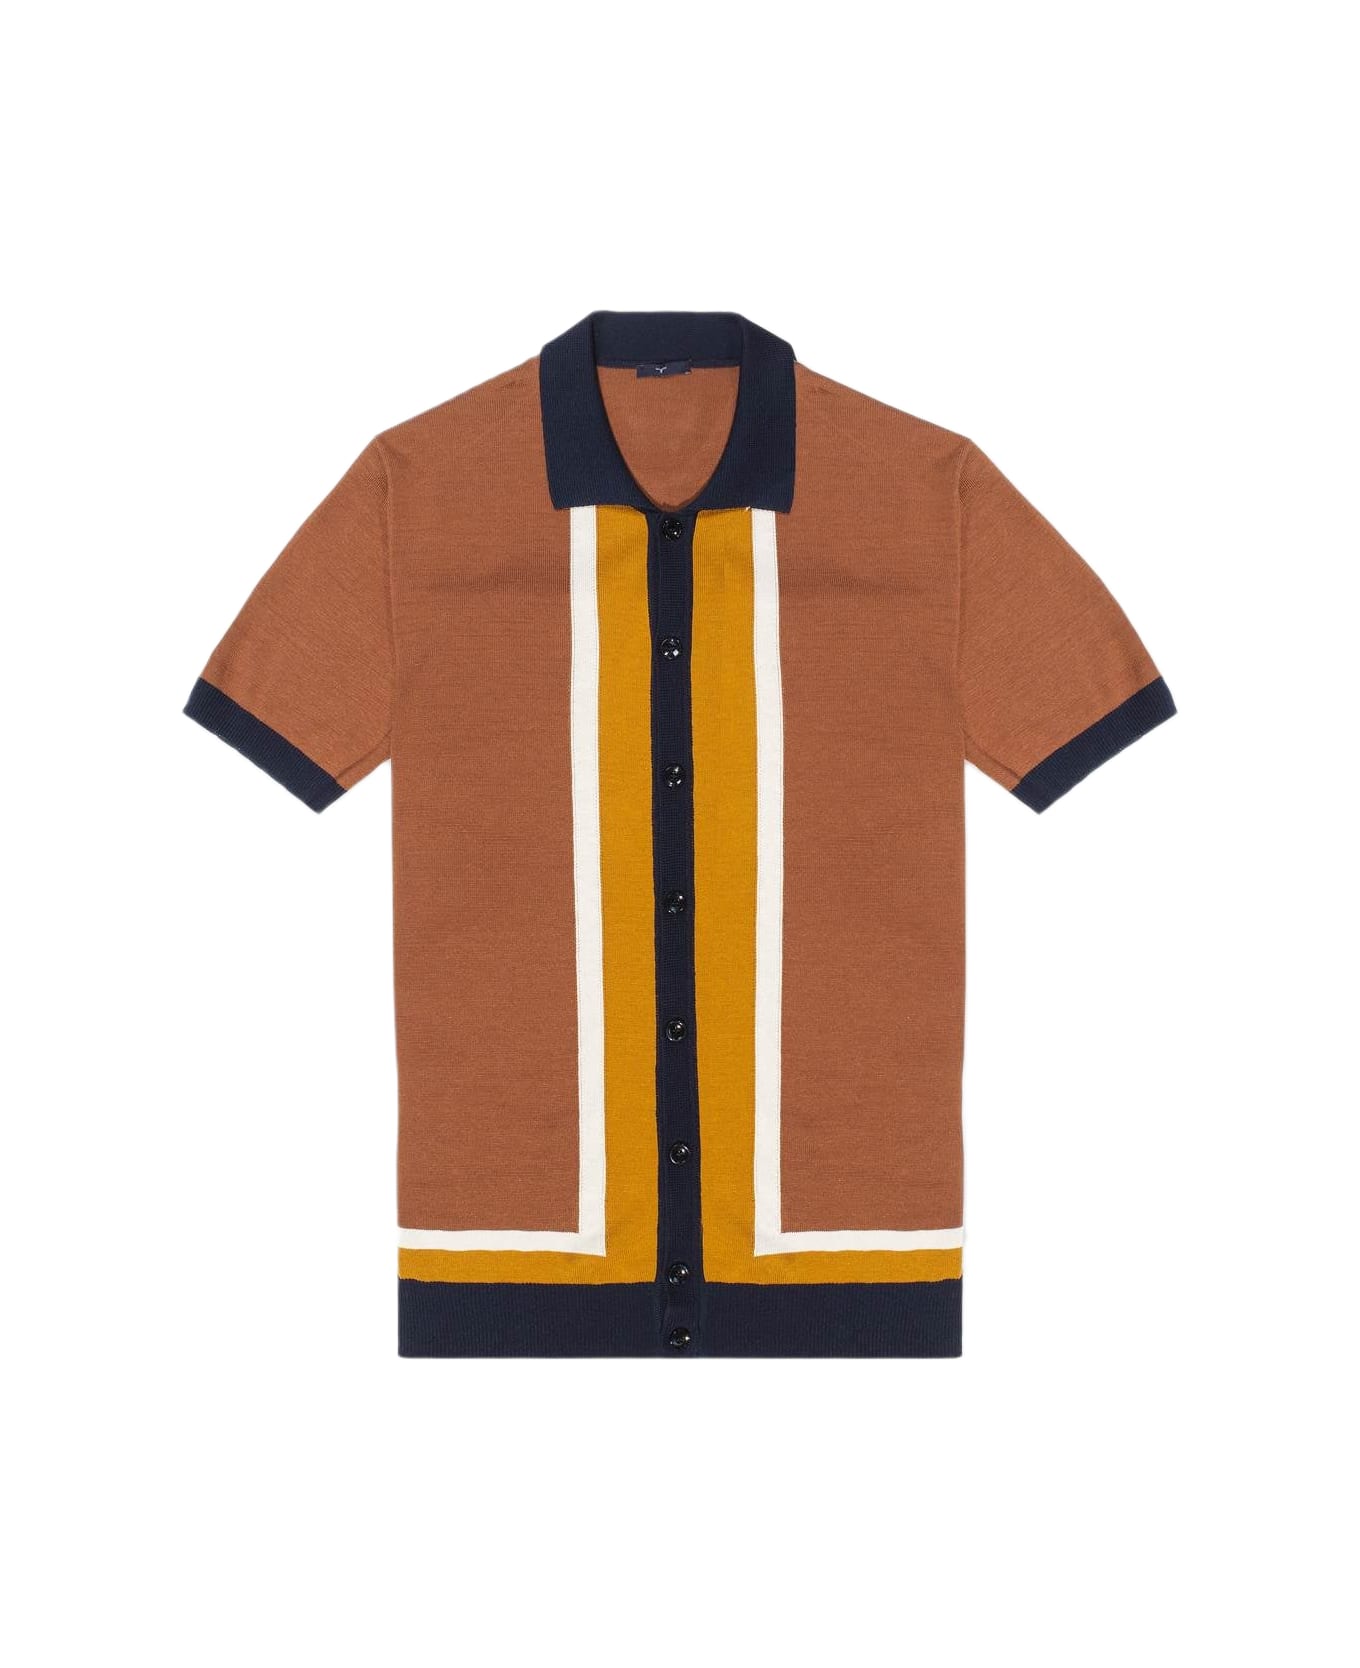 Larusmiani 'lautner' Shirt Shirt - Brown